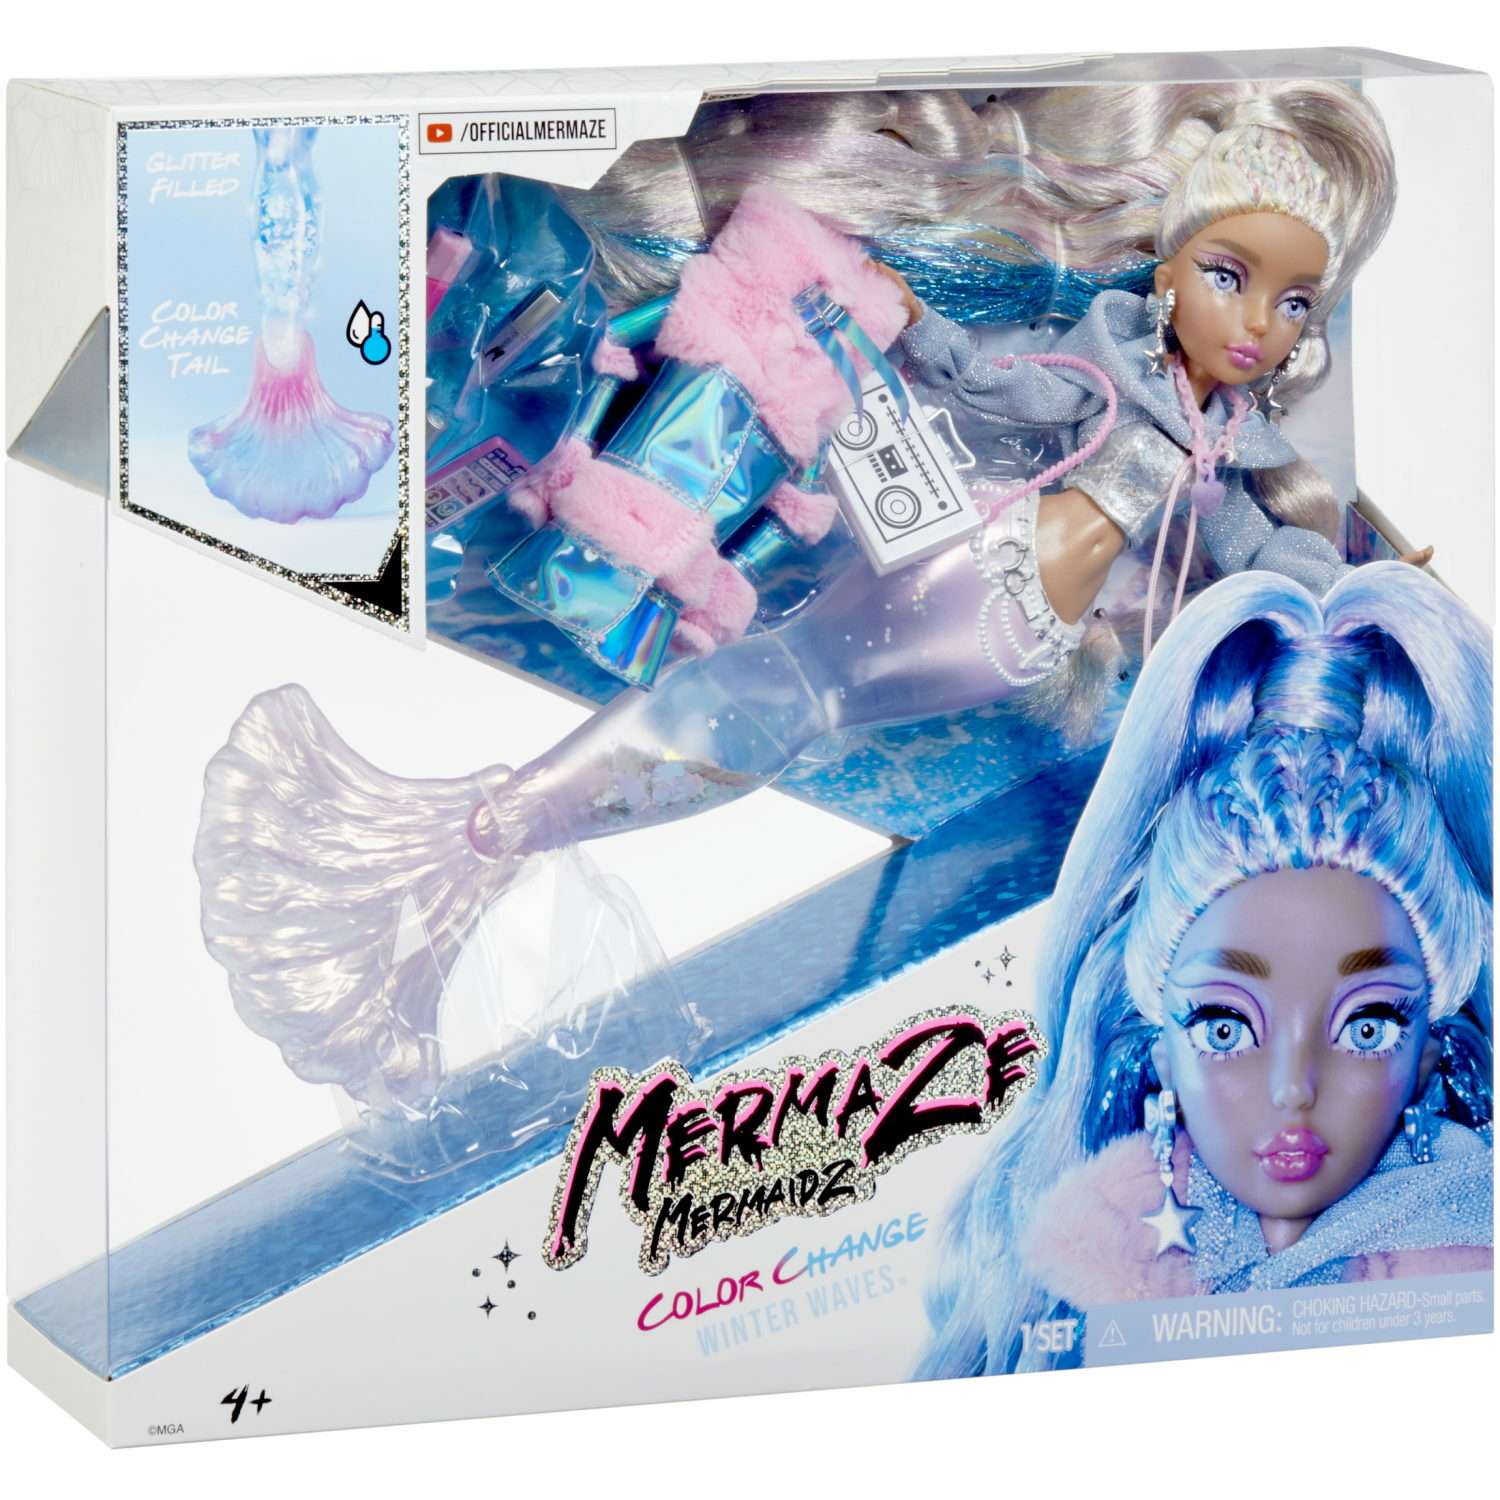 Кукла-русалка MGA Mermaze Mermaidz Kishiko меняющая цвет с аксессуарами 585435 - фото 2